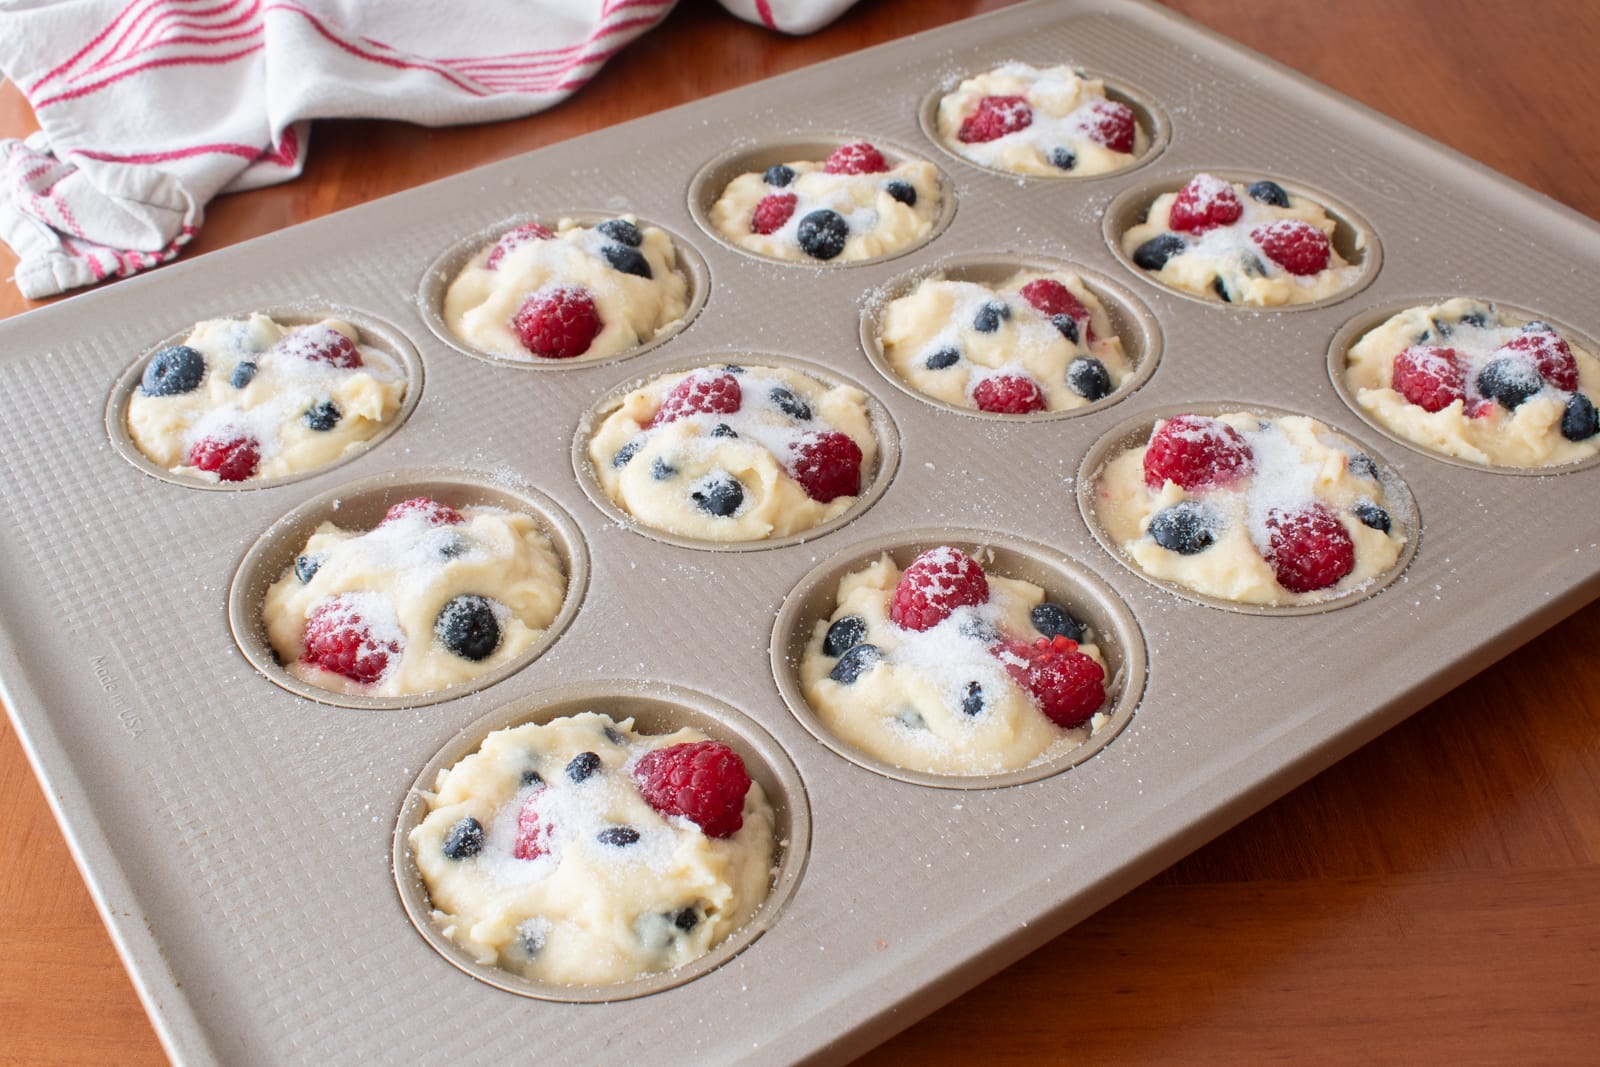 Blueberry-Raspberry Muffins